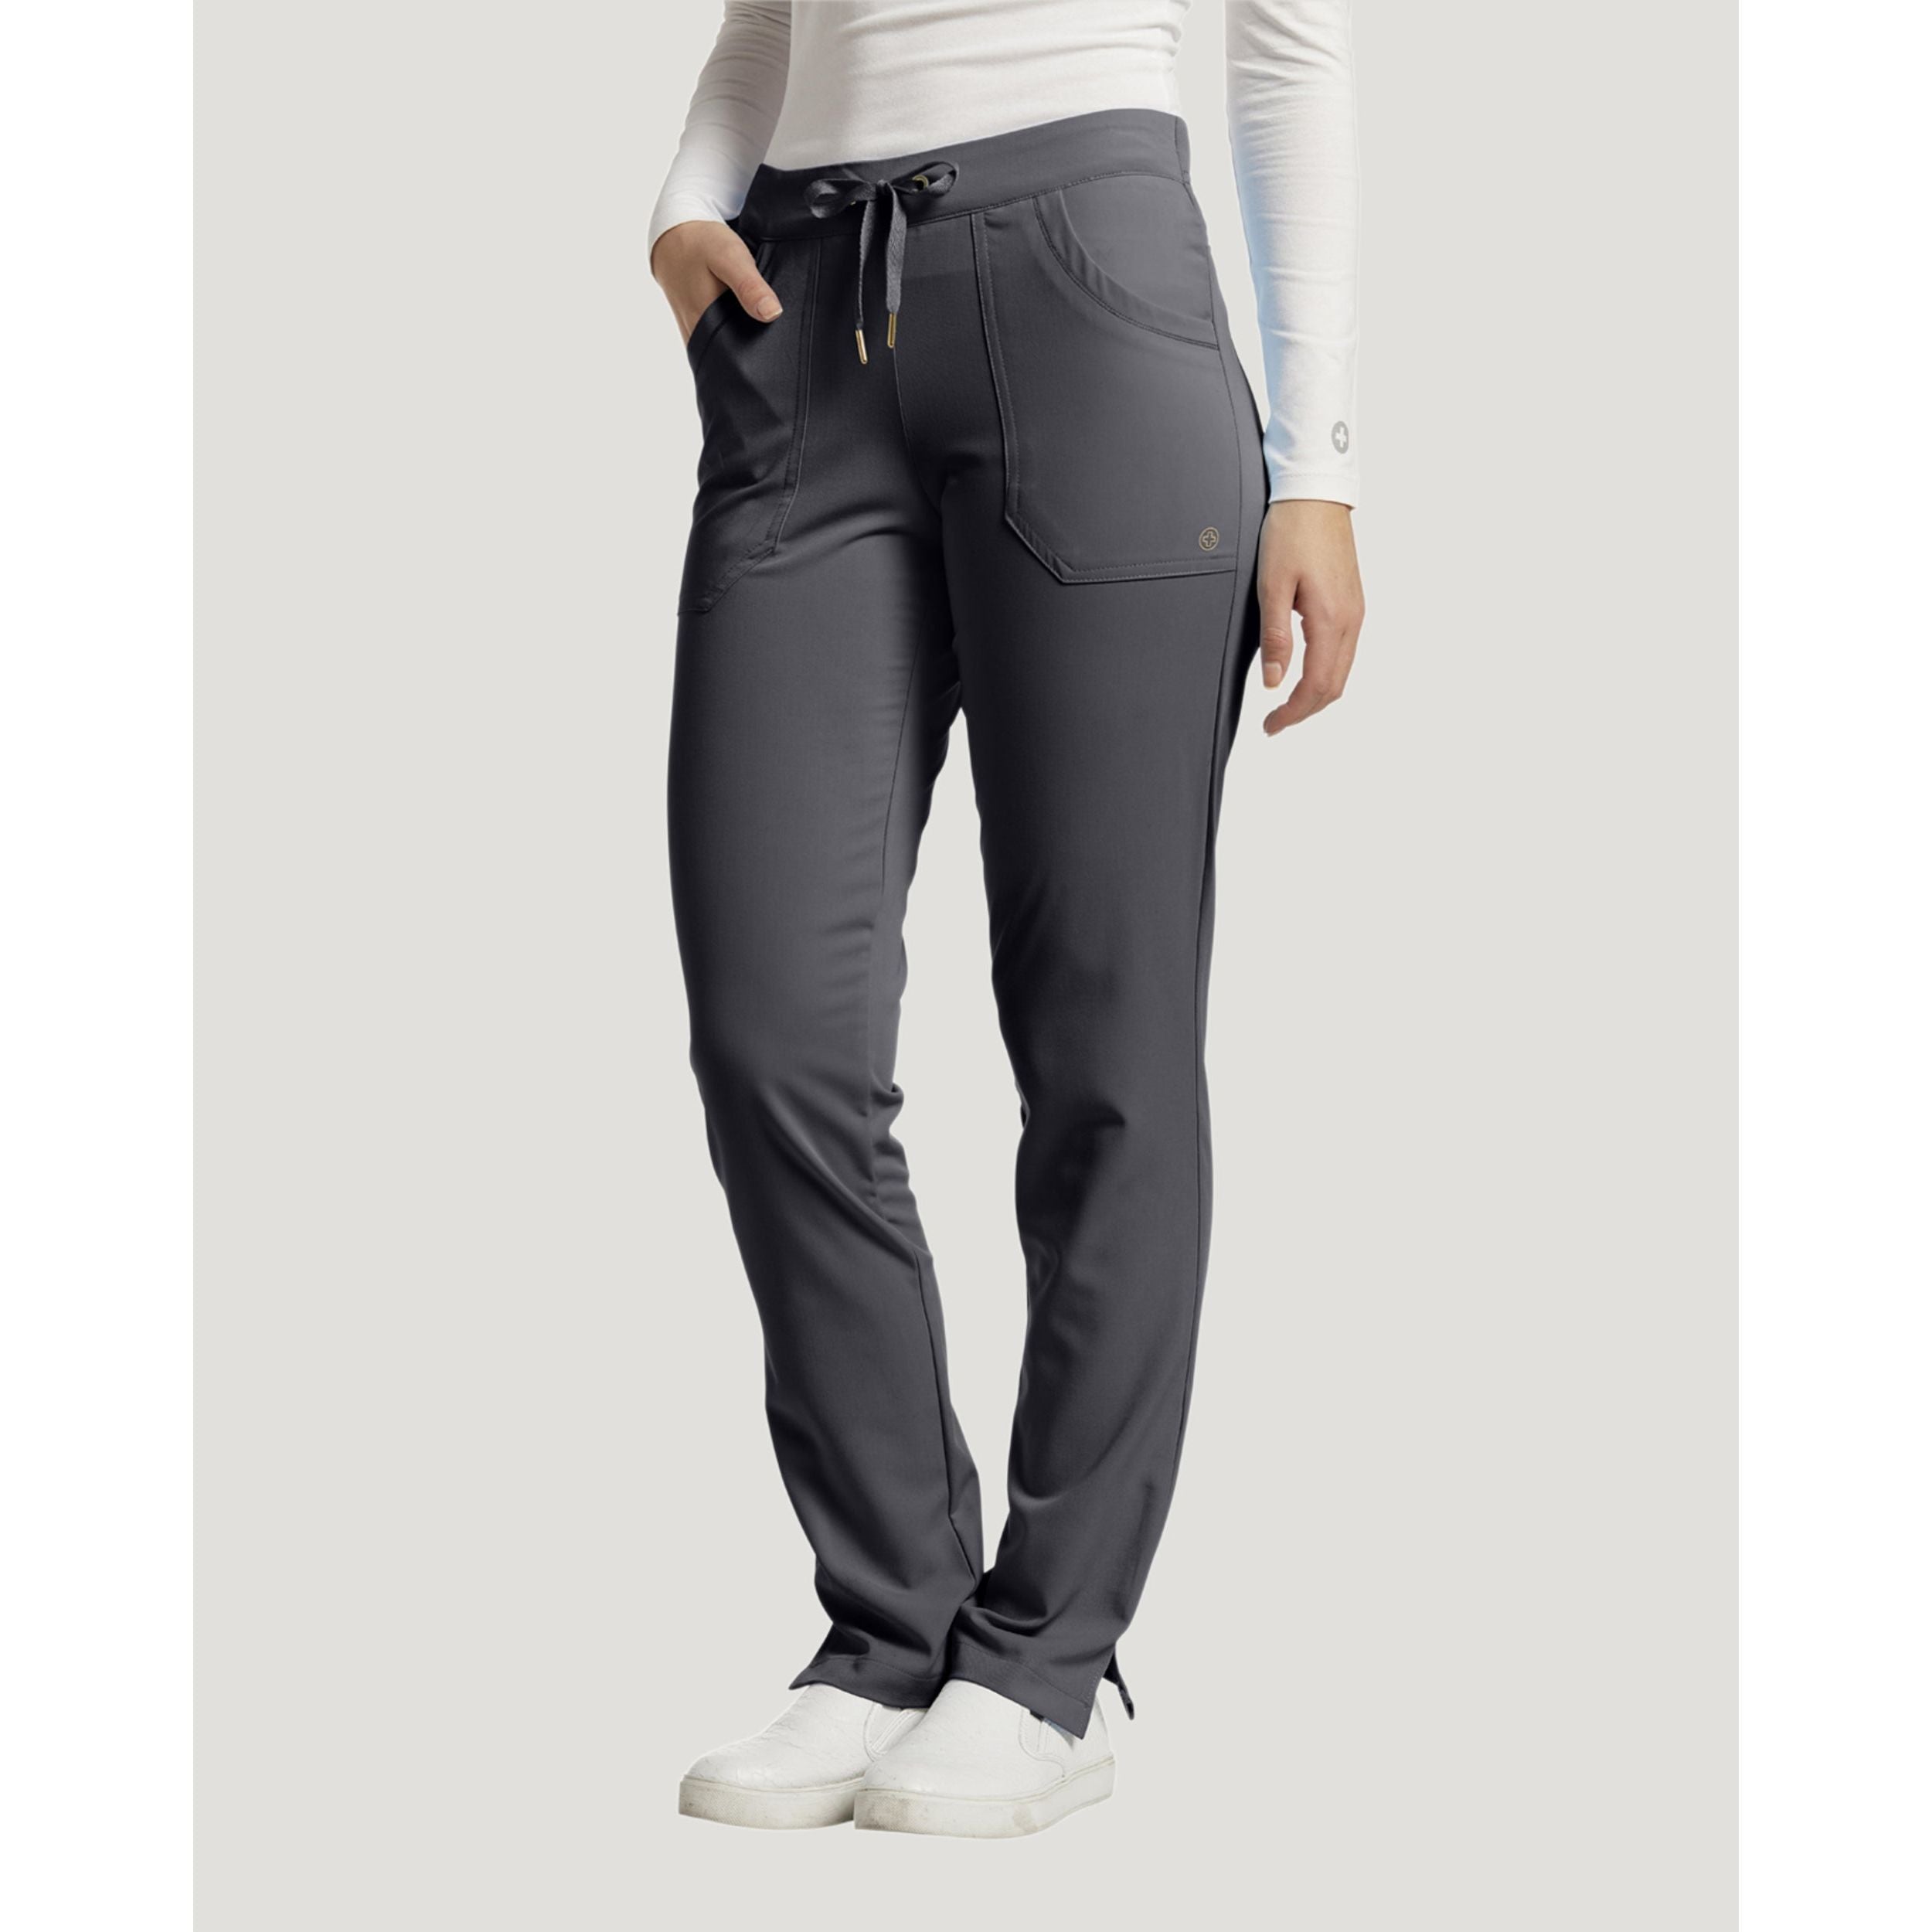 Scrub Pants by Marvella straight leg pants Inseam: Petite 29” (384P) SALE